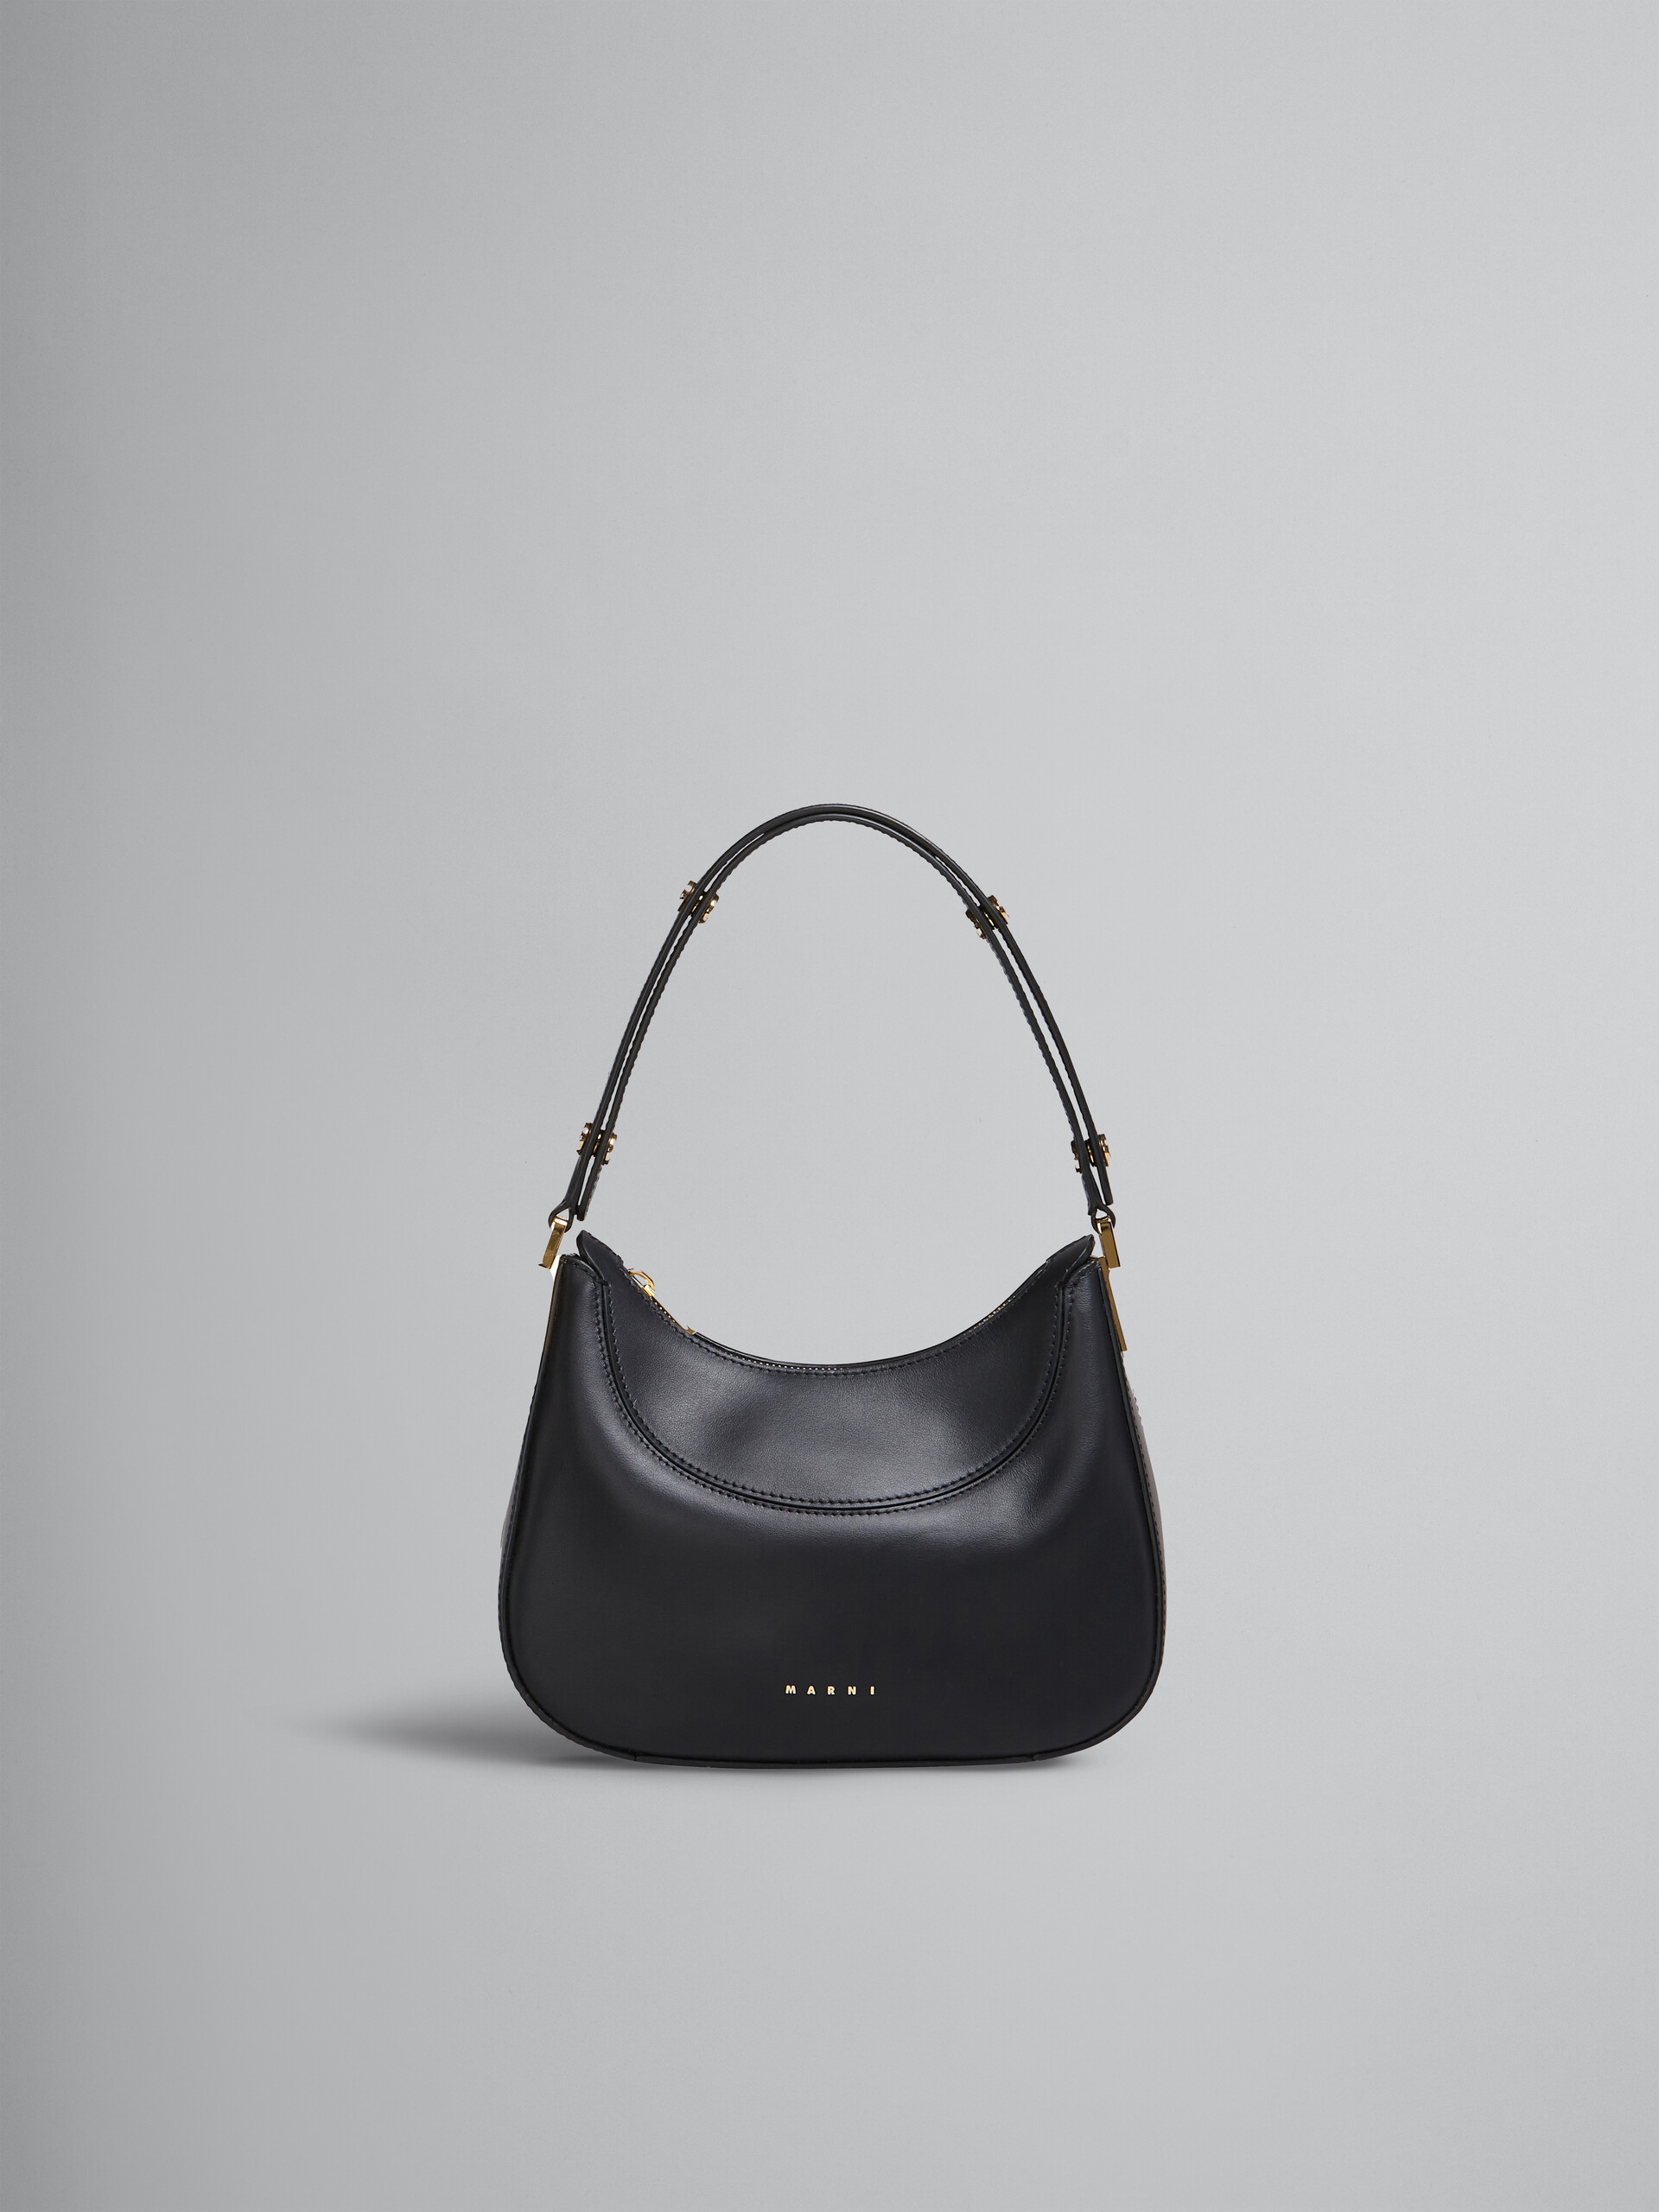 Milano mini bag in black leather - Handbags - Image 1